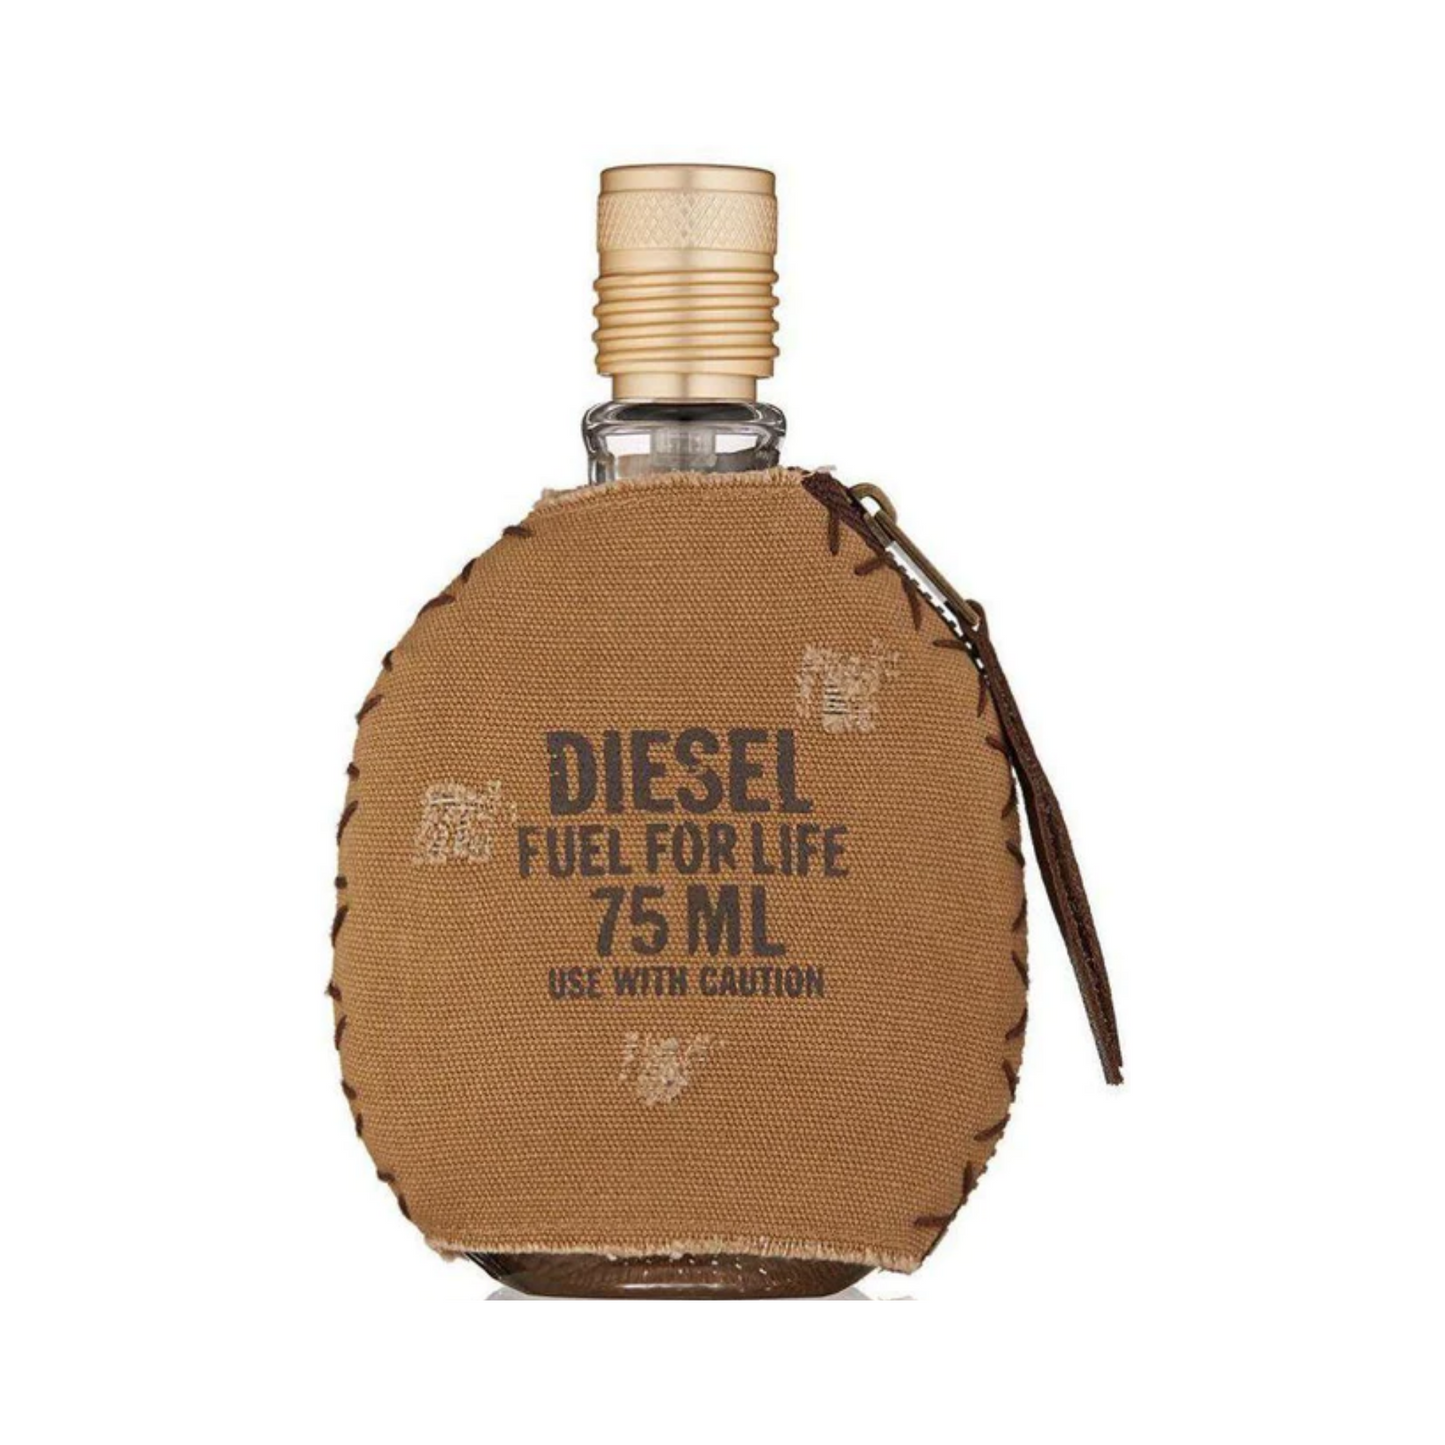 Diesel Fuel for Life type Perfume for Men